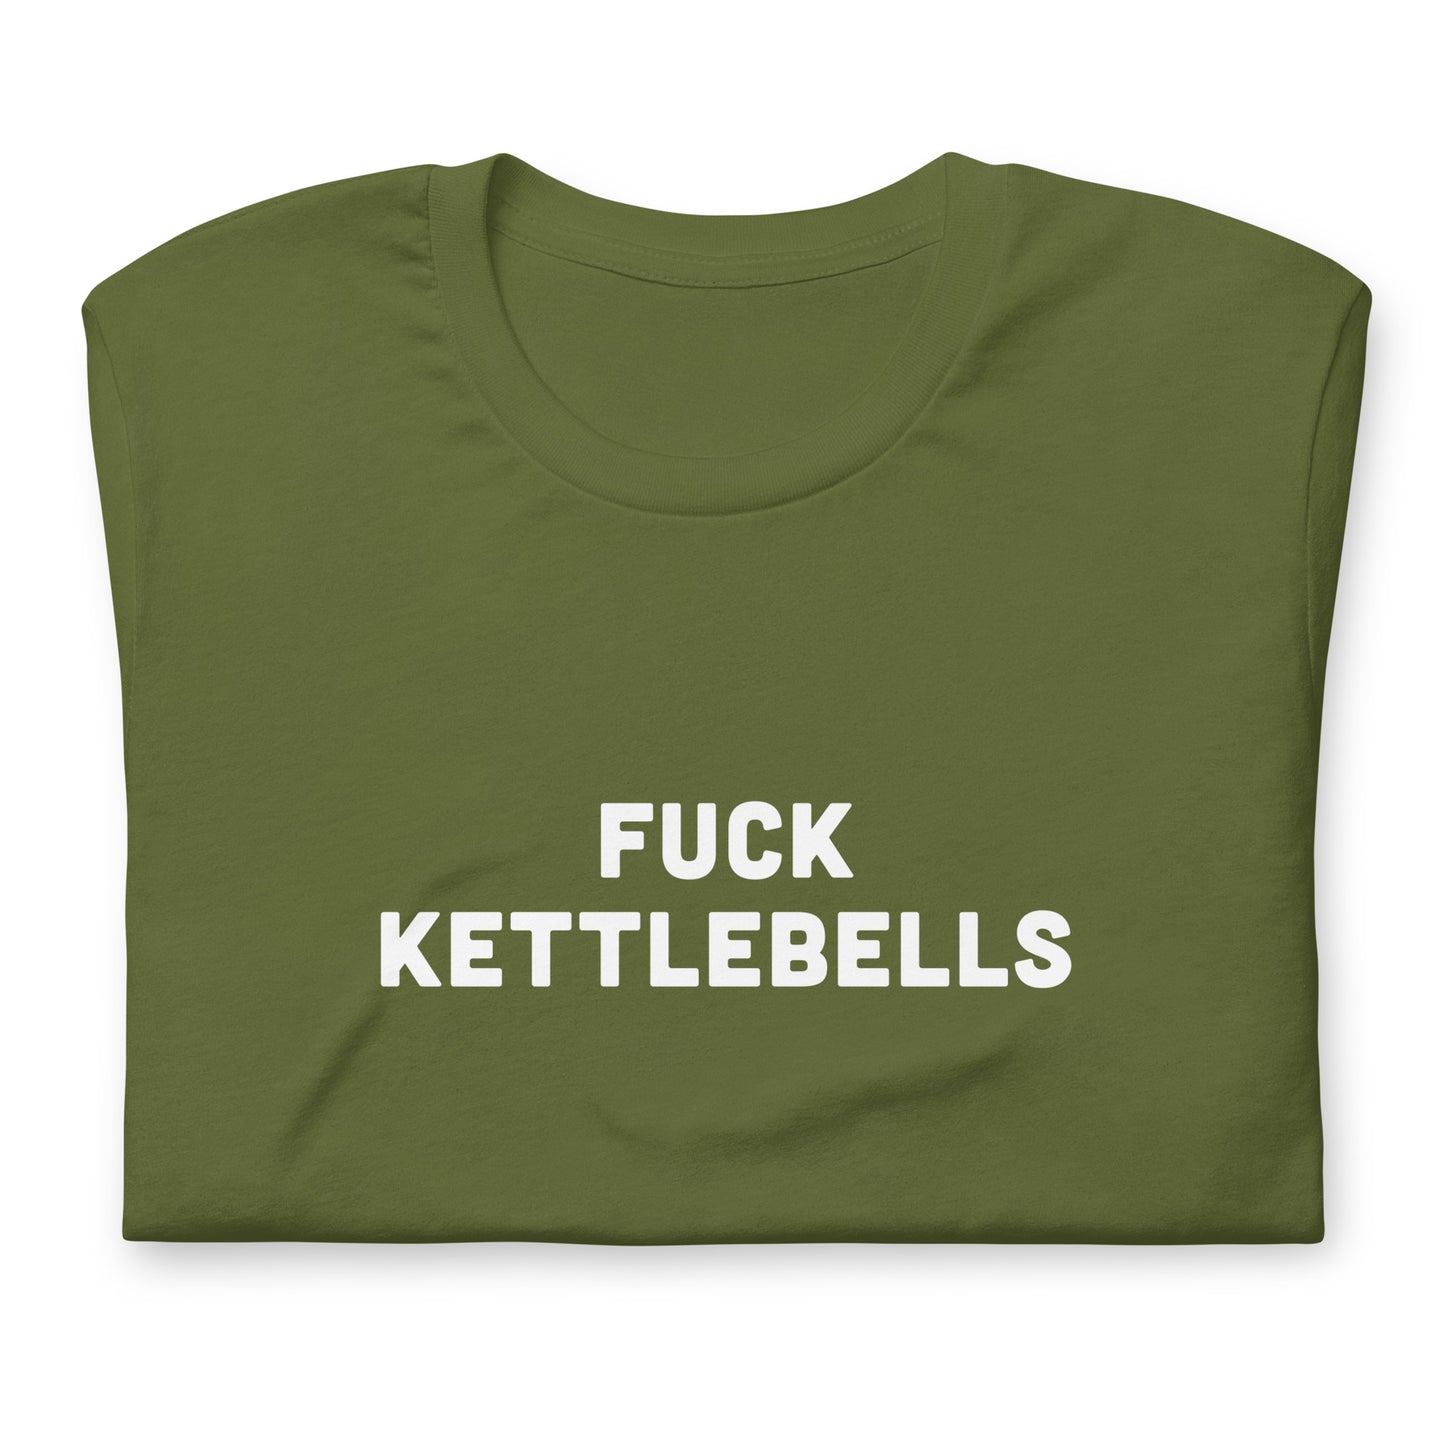 Fuck Kettlebells T-Shirt Size S Color Navy